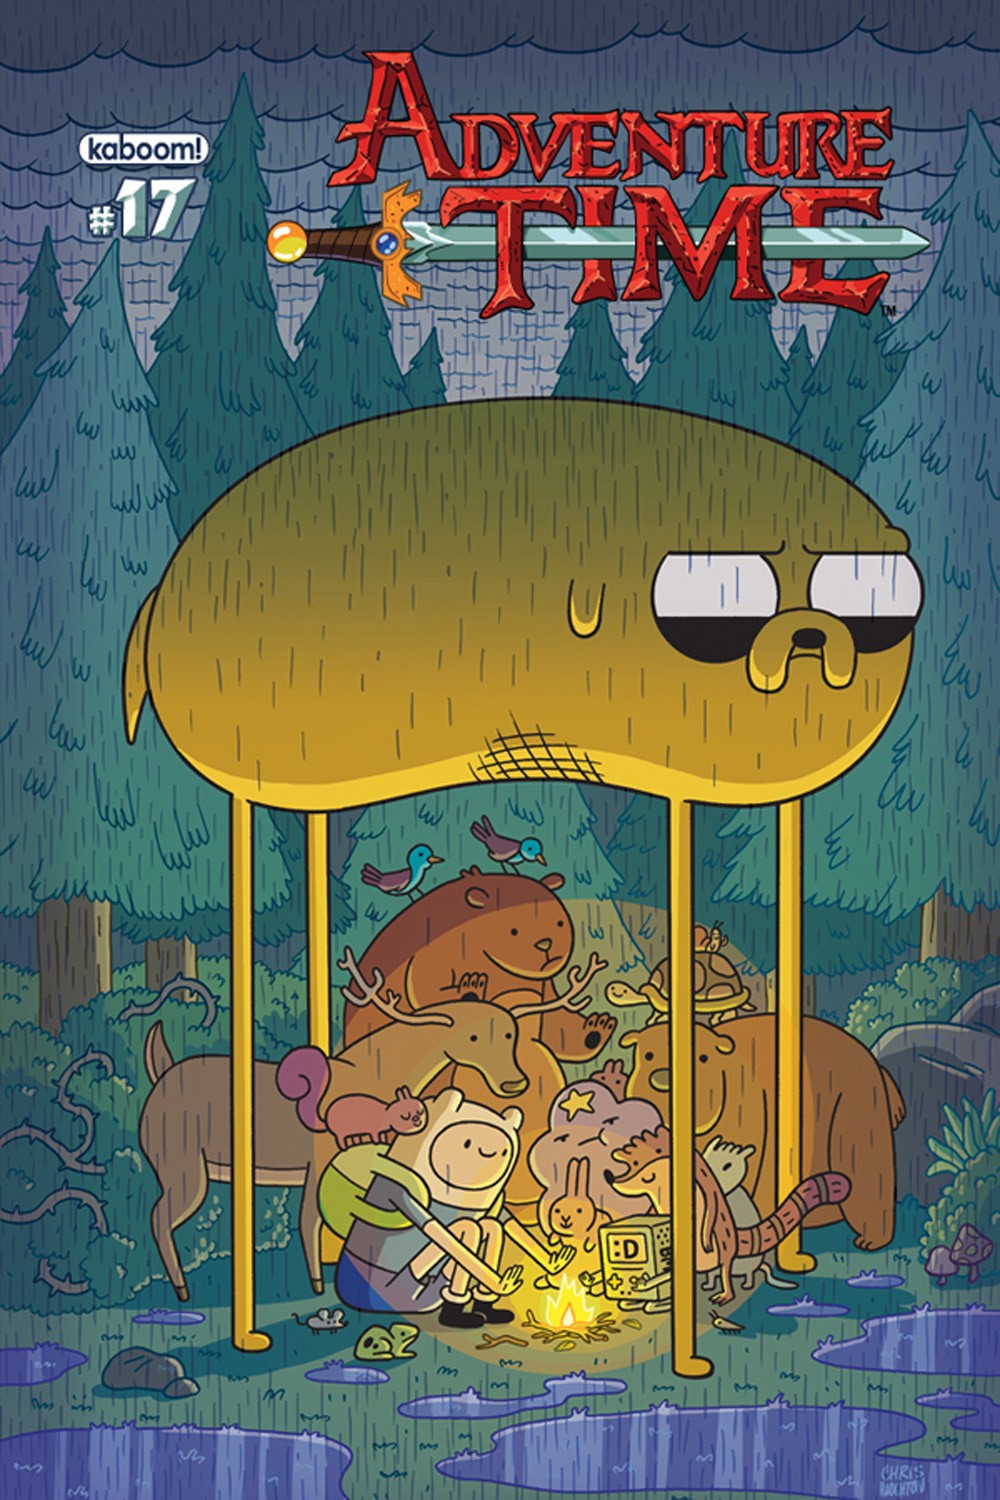 DVD Adventure Time: Hora De Aventura Com Finn & Jake - Volume 2 em